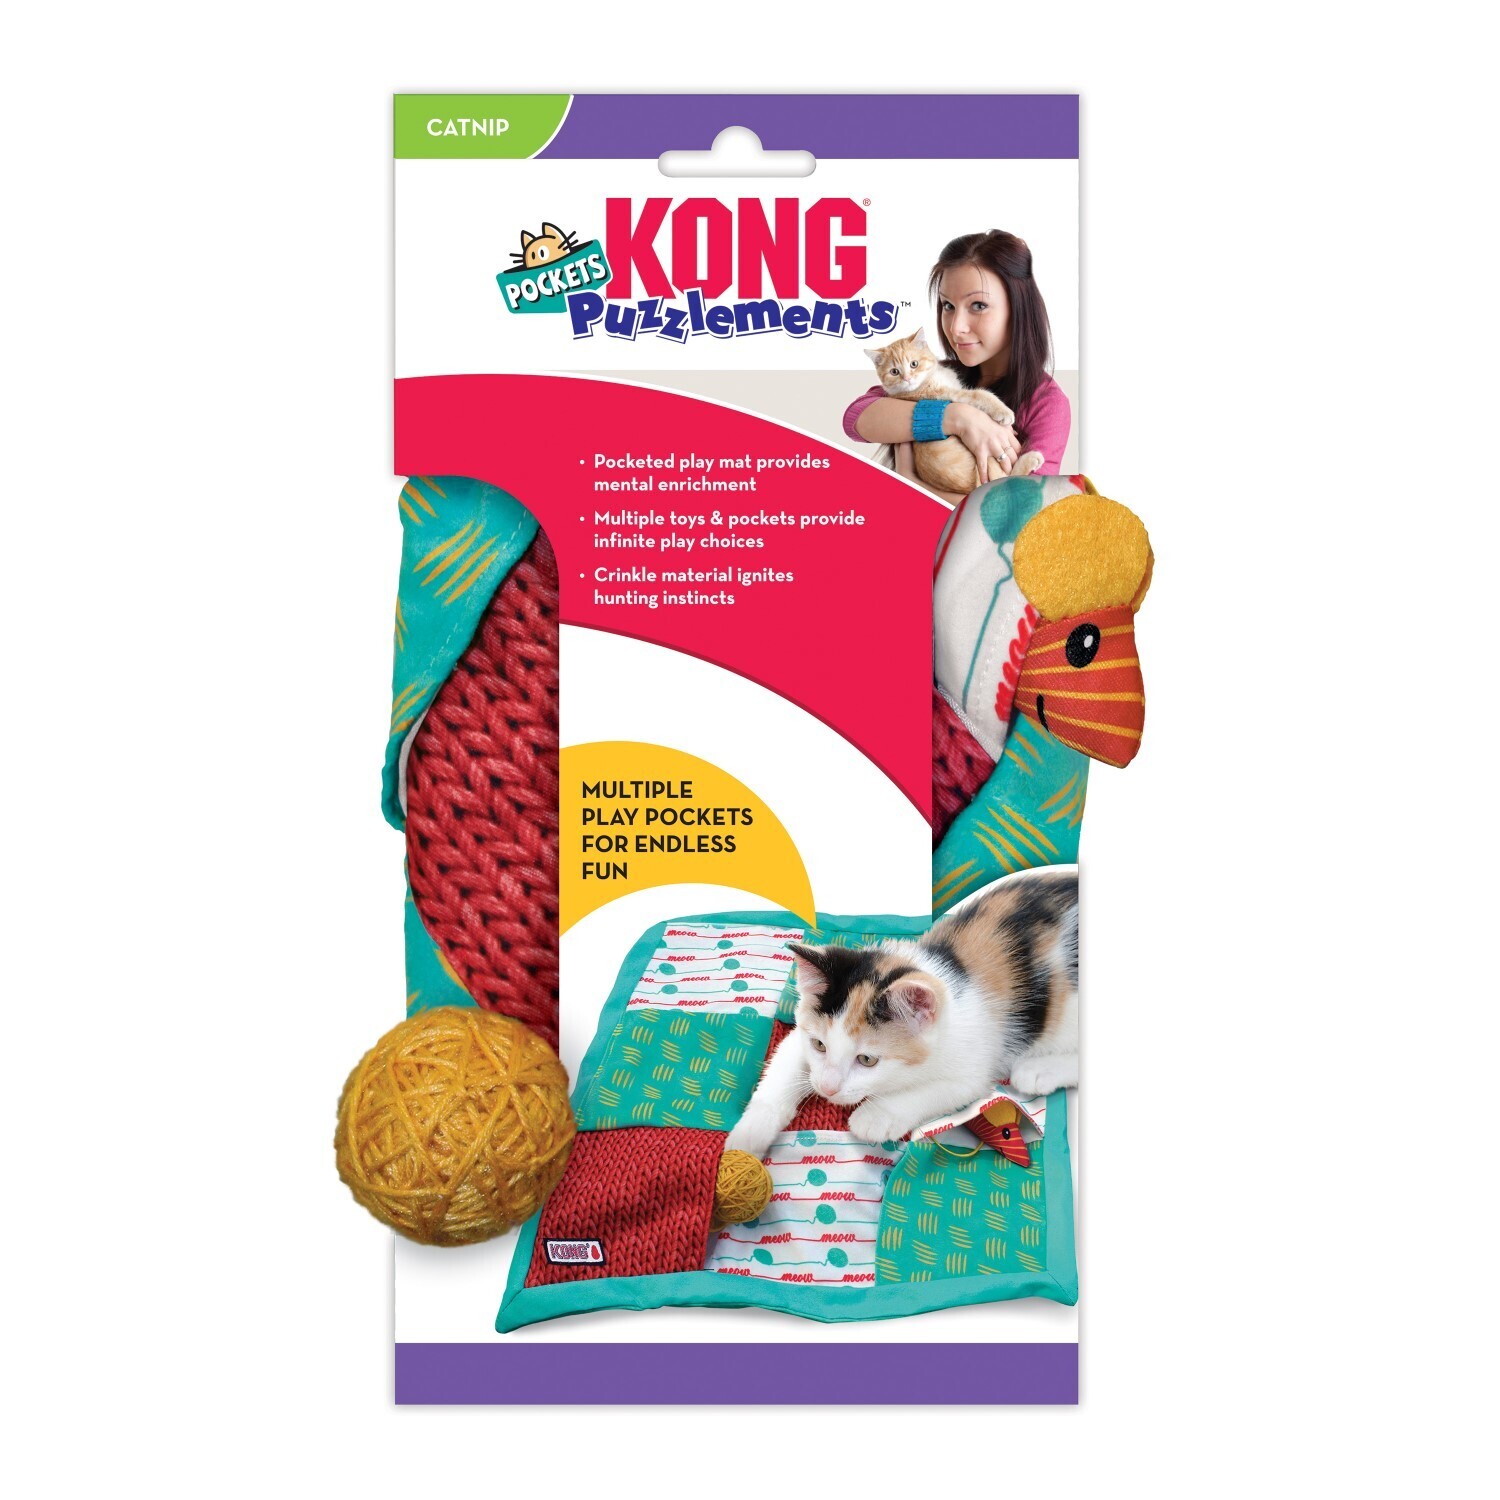 2 x KONG Puzzlements Pockets Interactive Treat Hiding Cat Play Mat image 1